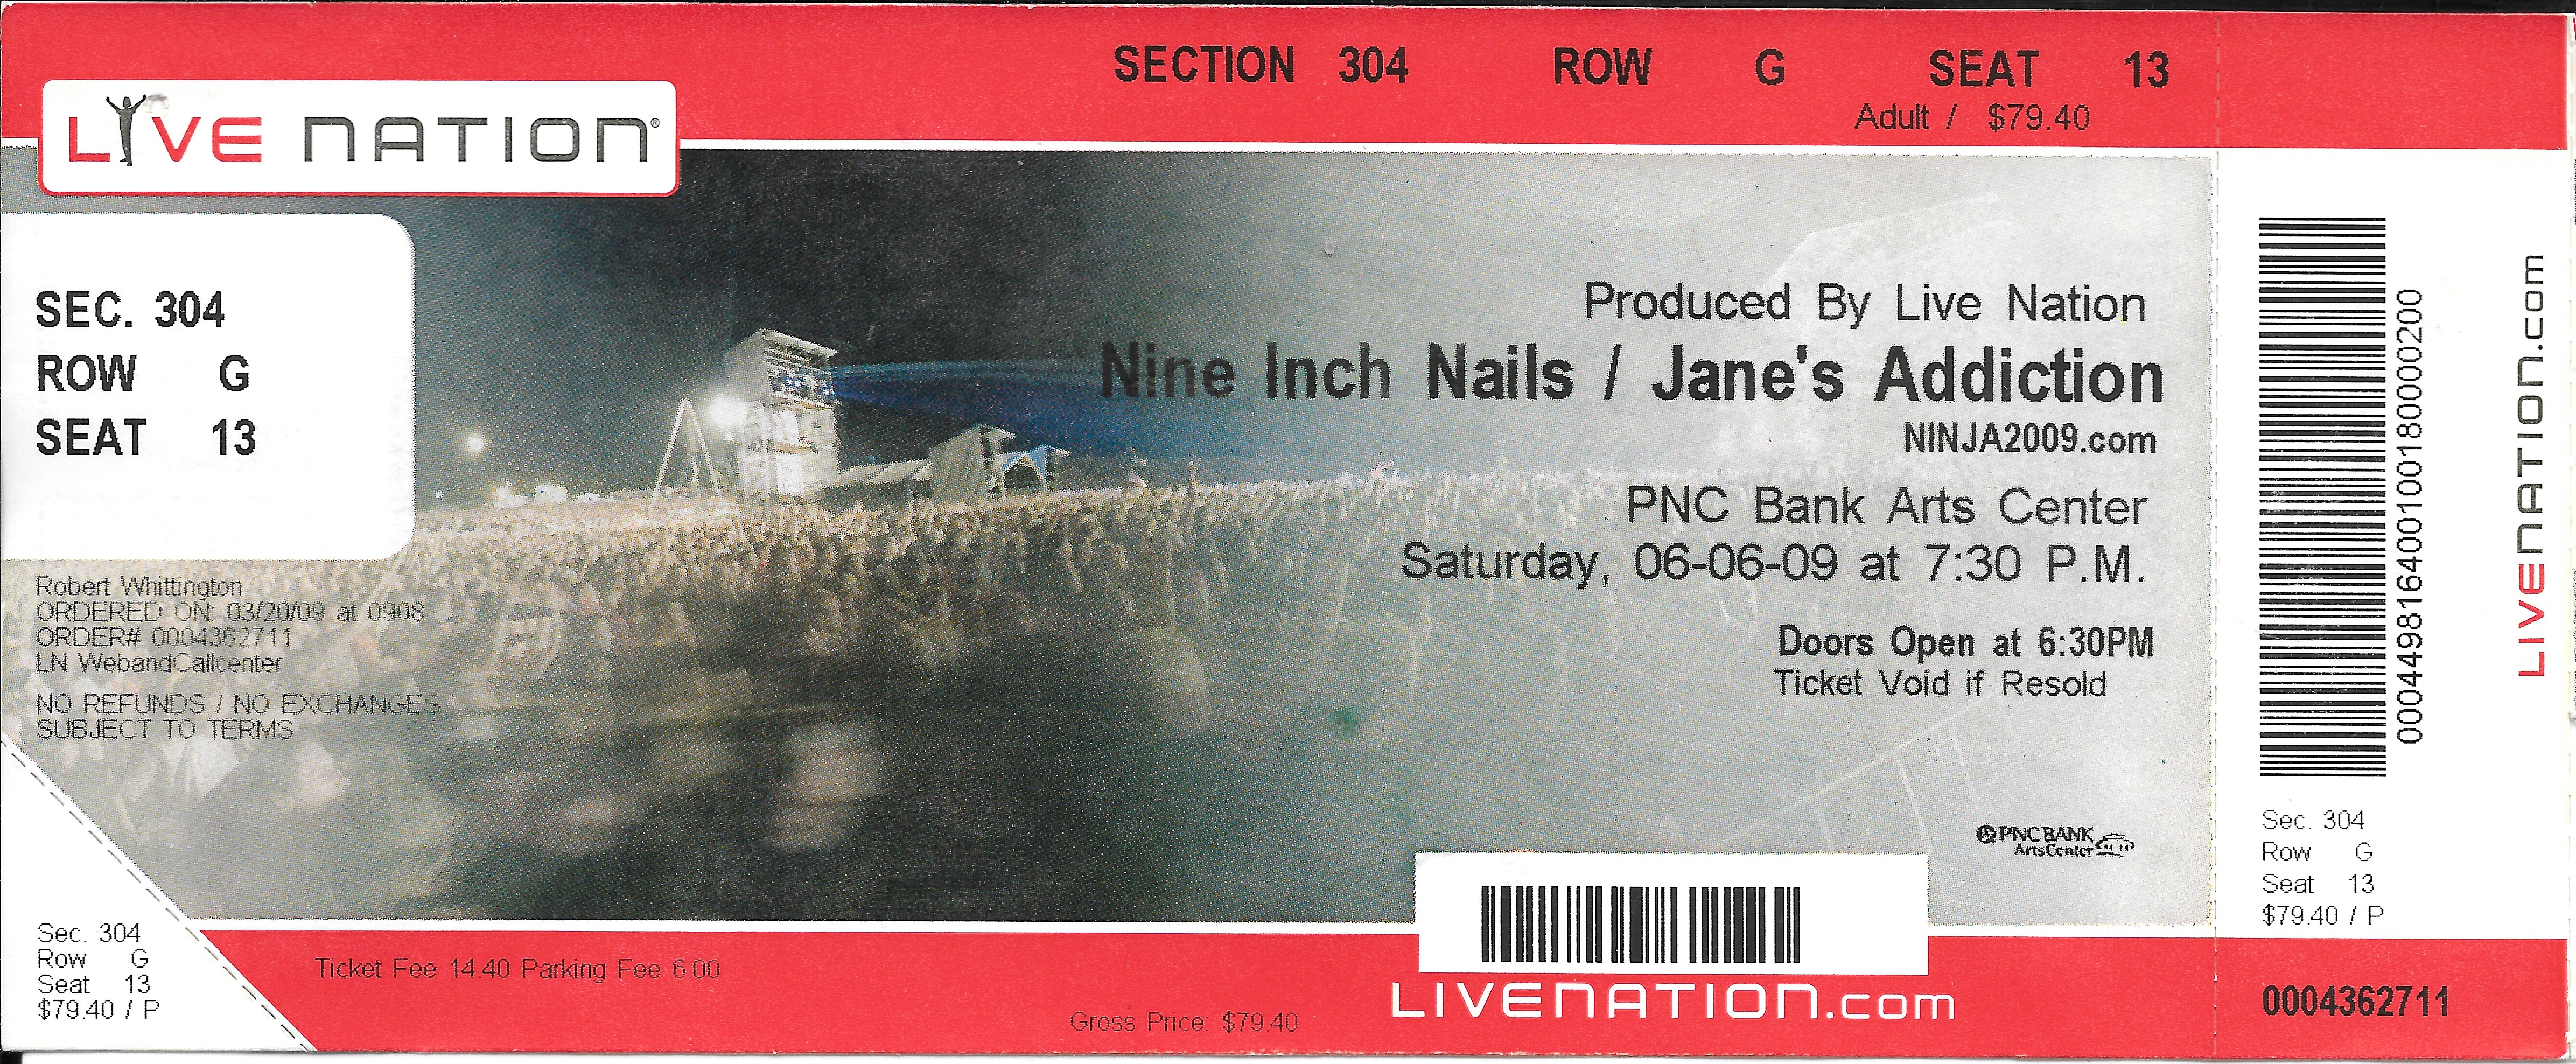 2009/06/06 Ticket